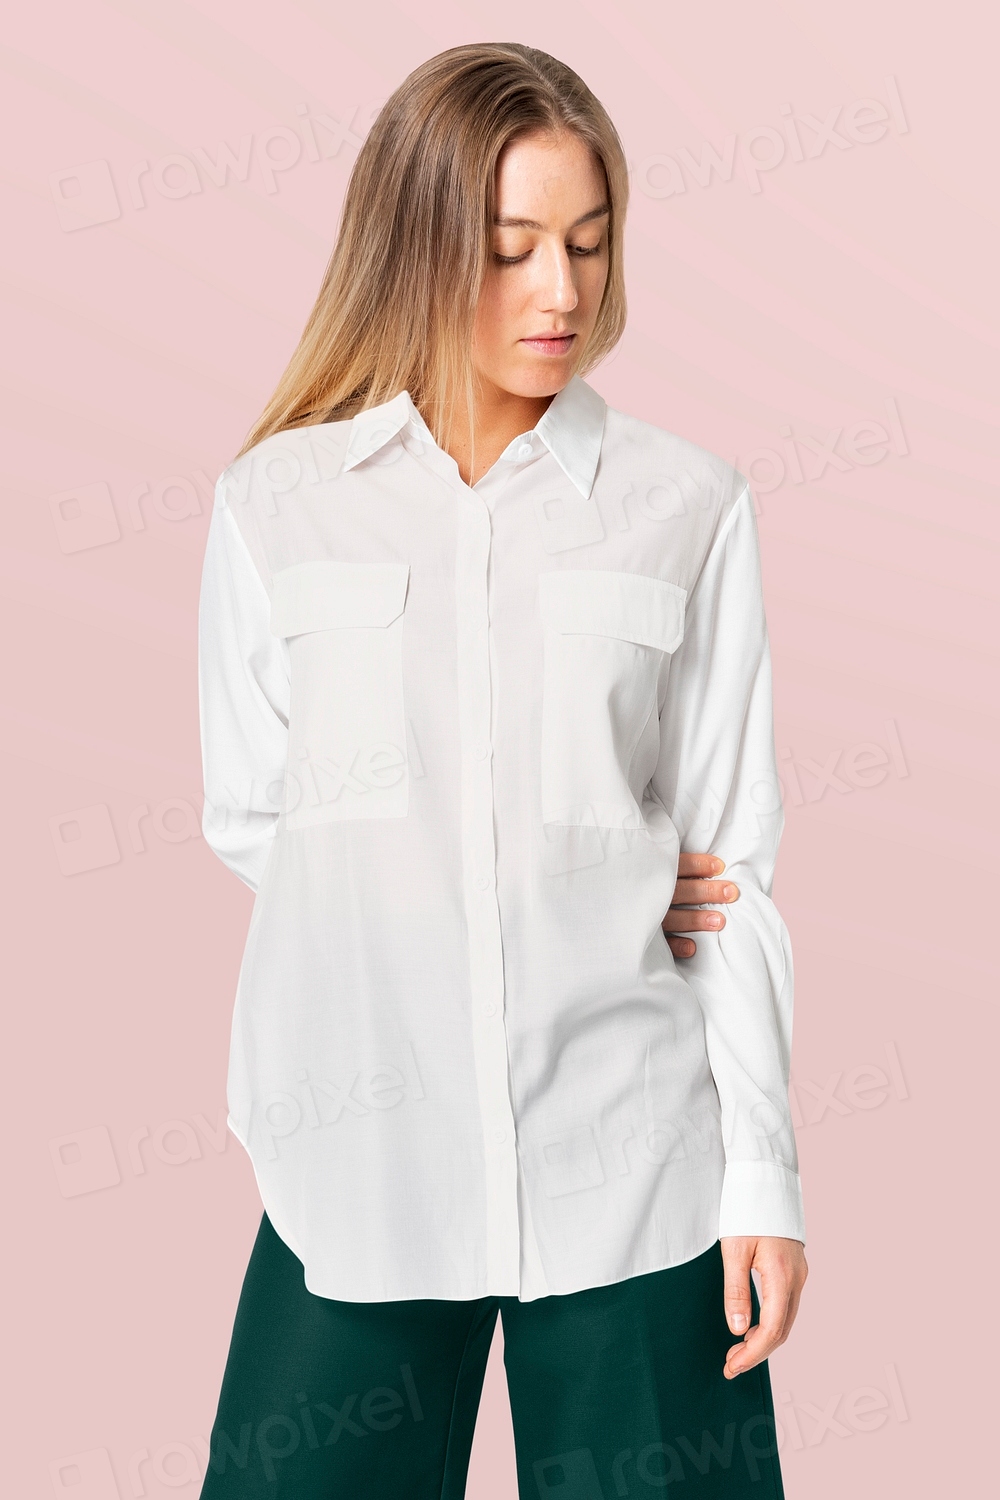 Women’s blouse mockup psd with pants | Premium PSD - rawpixel